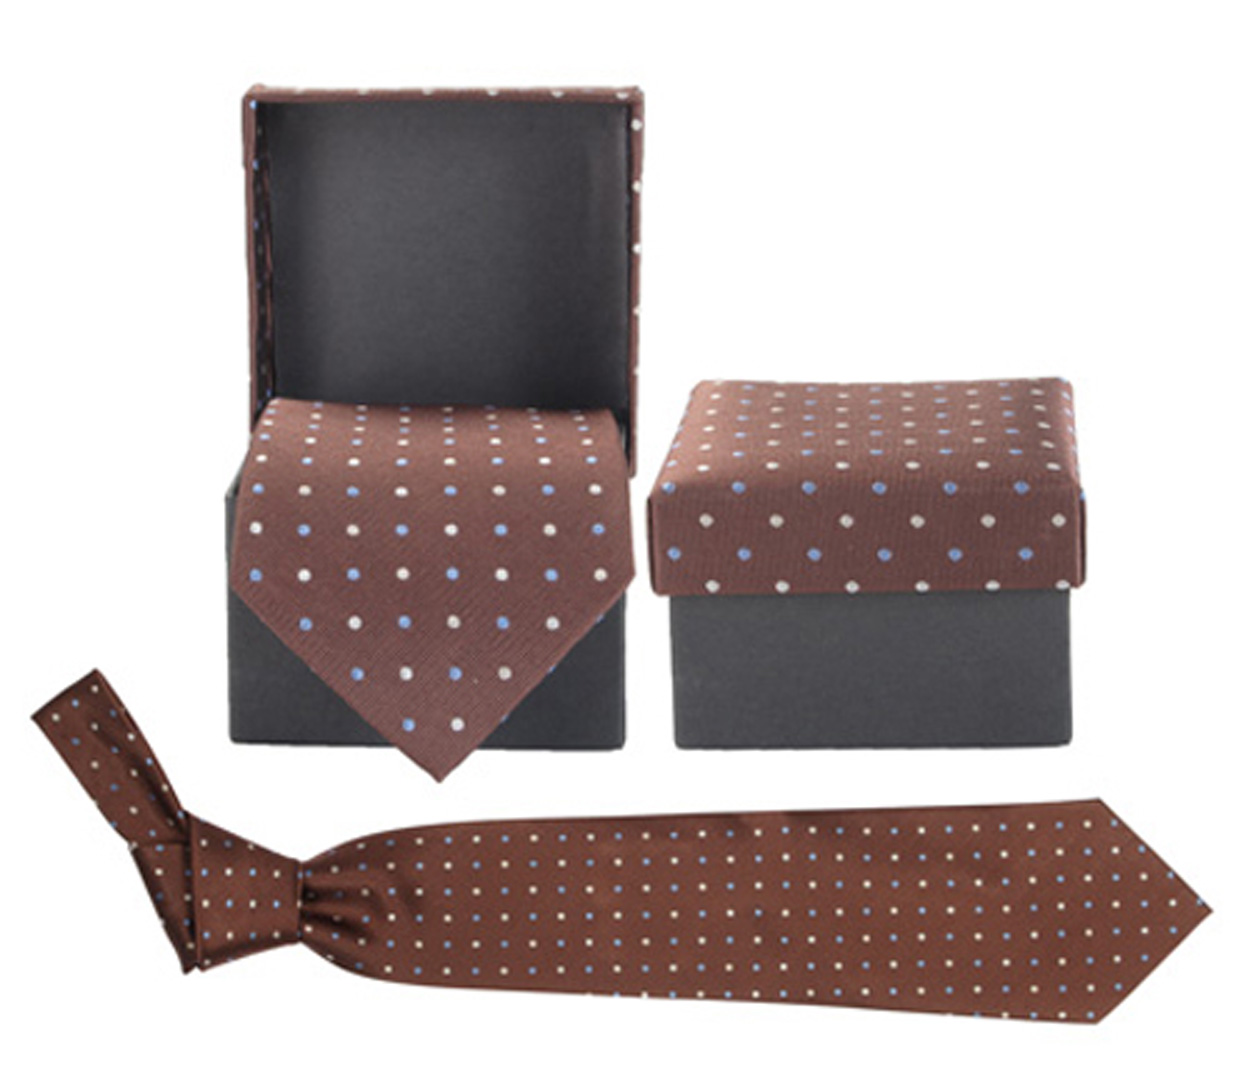 Luxey tie - brown